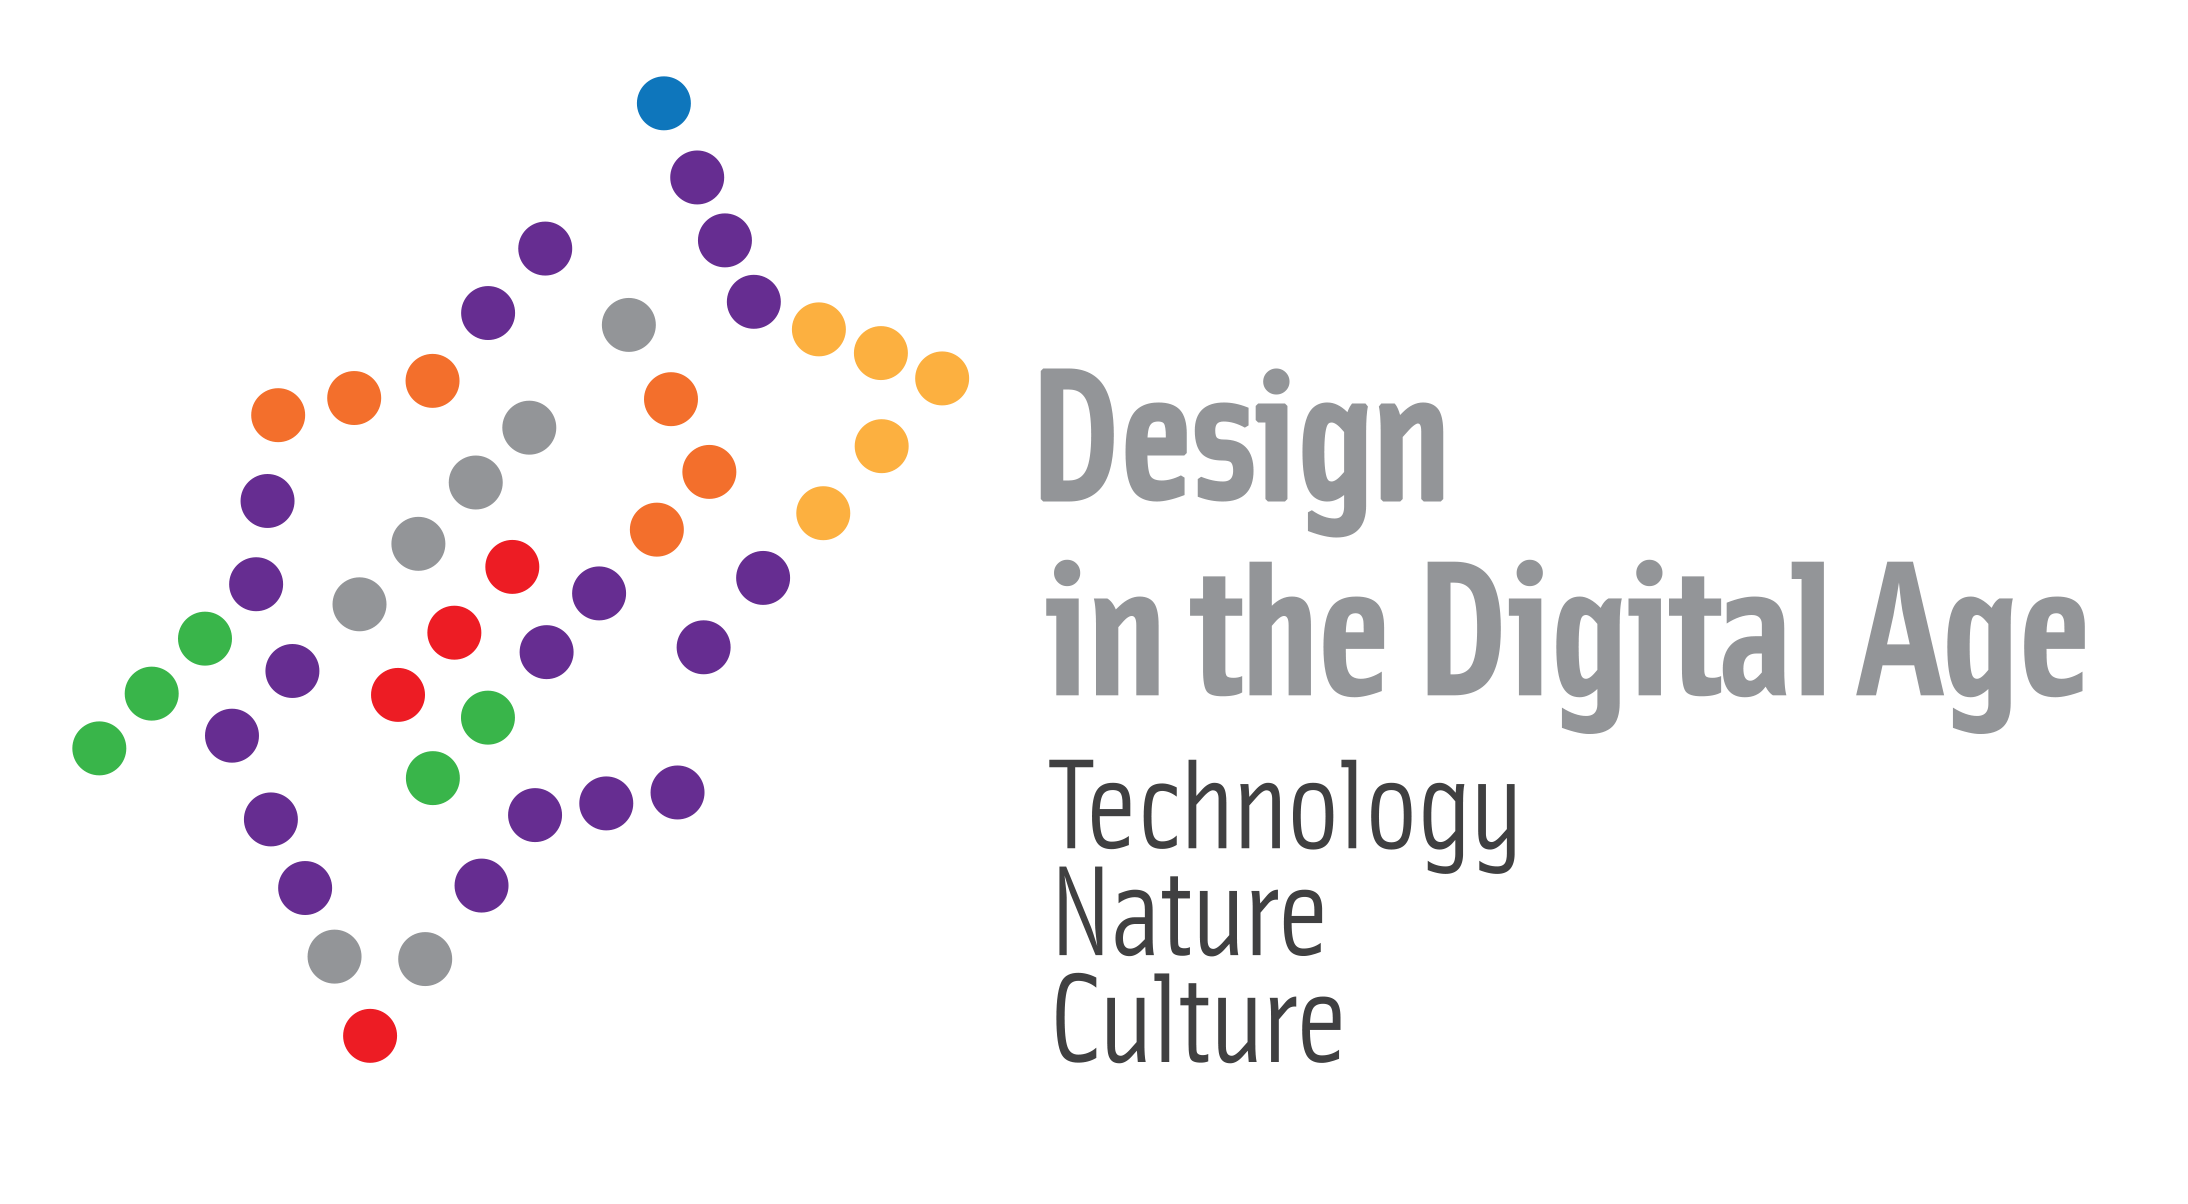 Design in the Digital Age logo